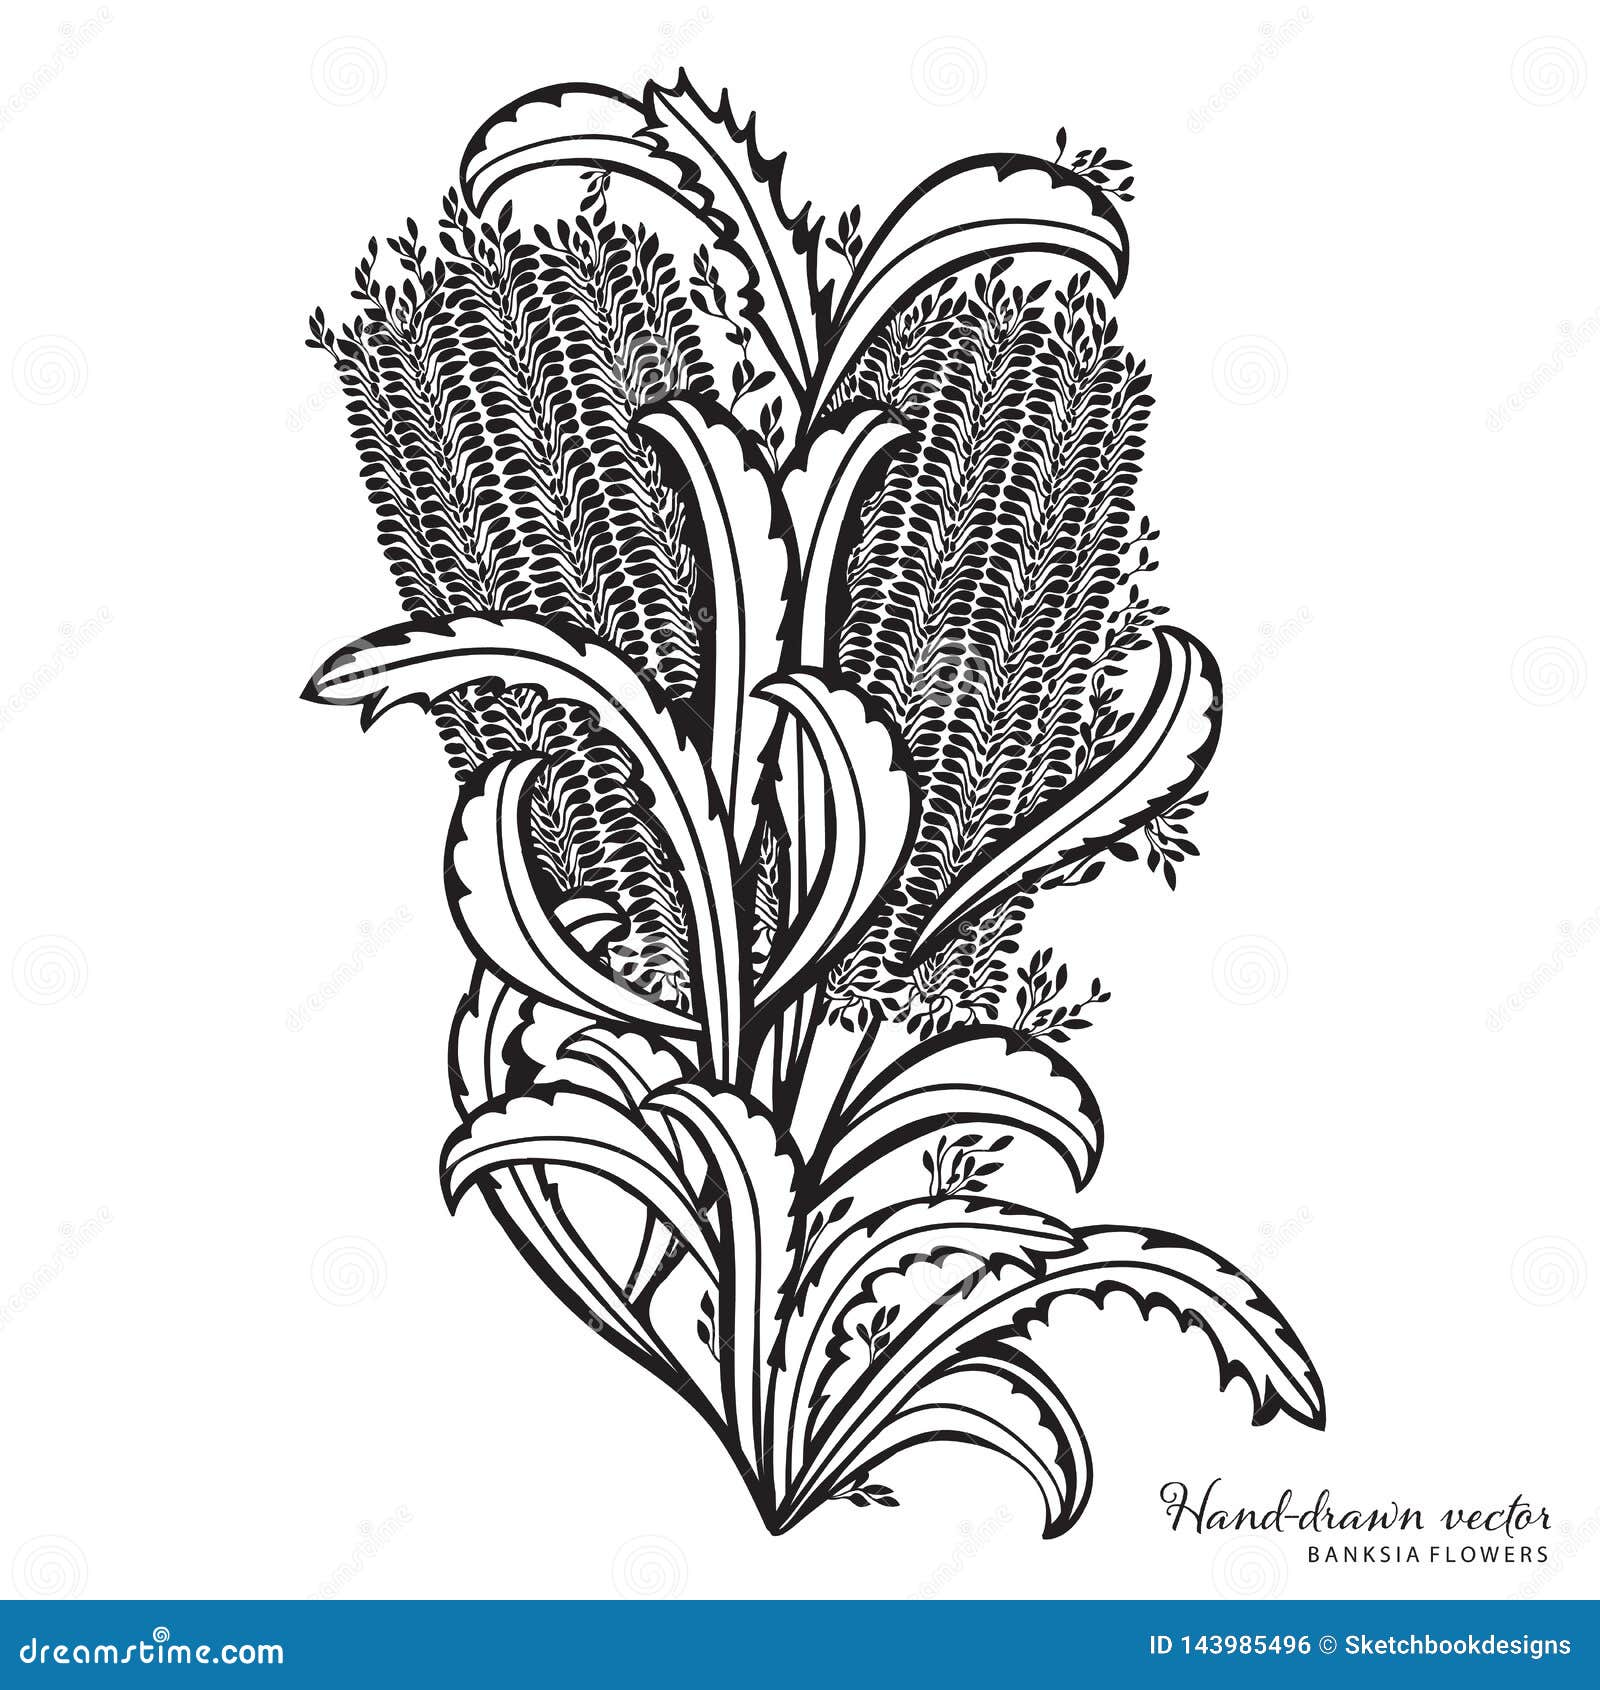 black and white hand drawn banksia floral arrangement